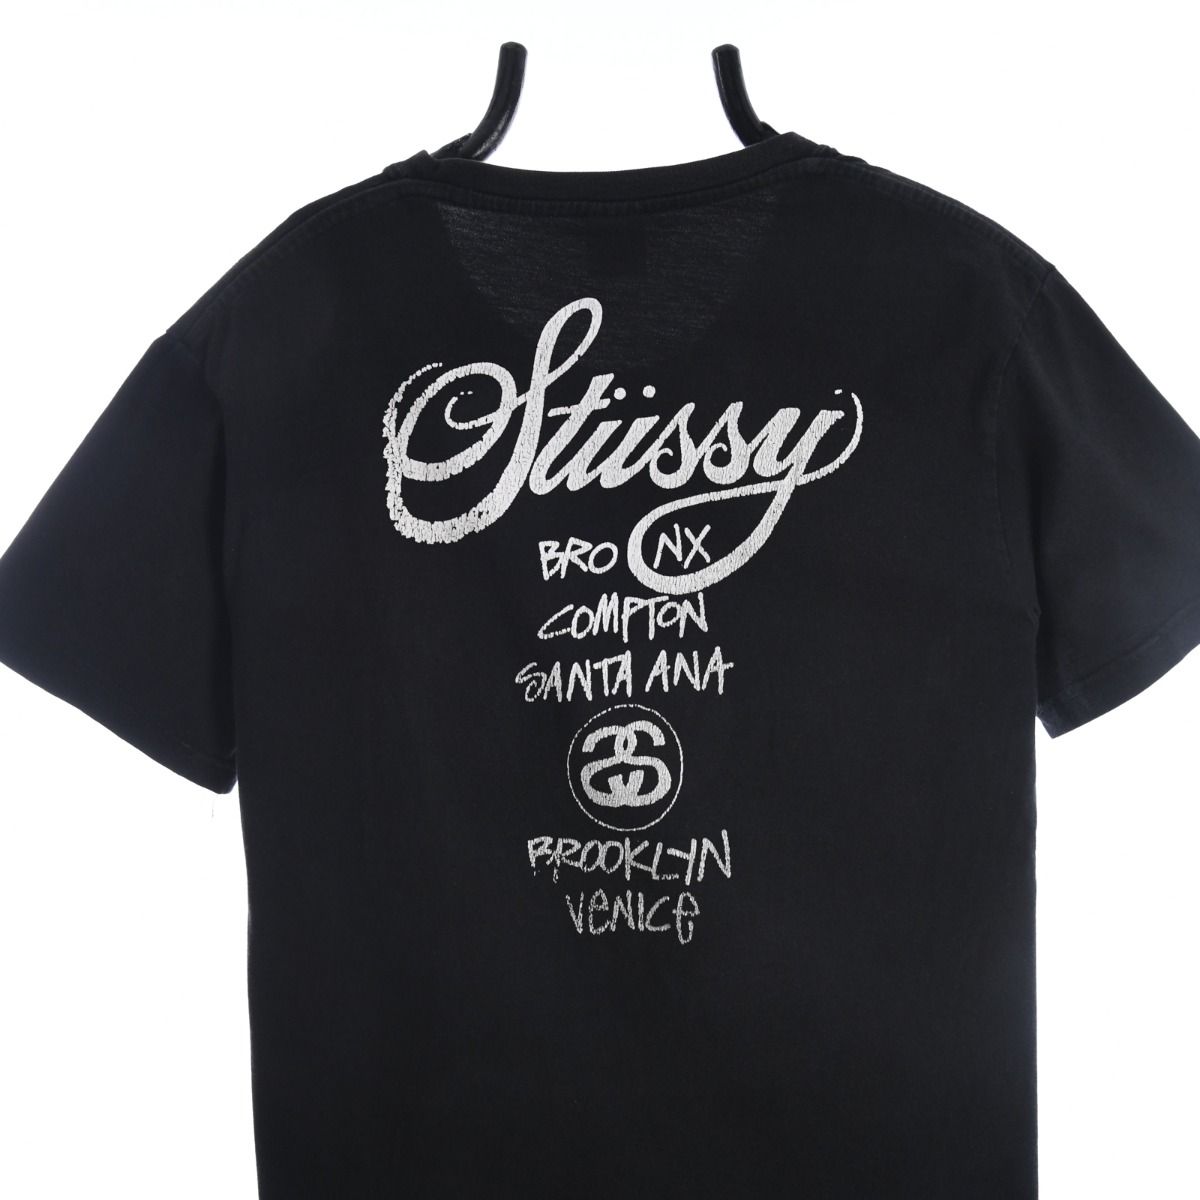 Excellent Stussy Black T-Shirt